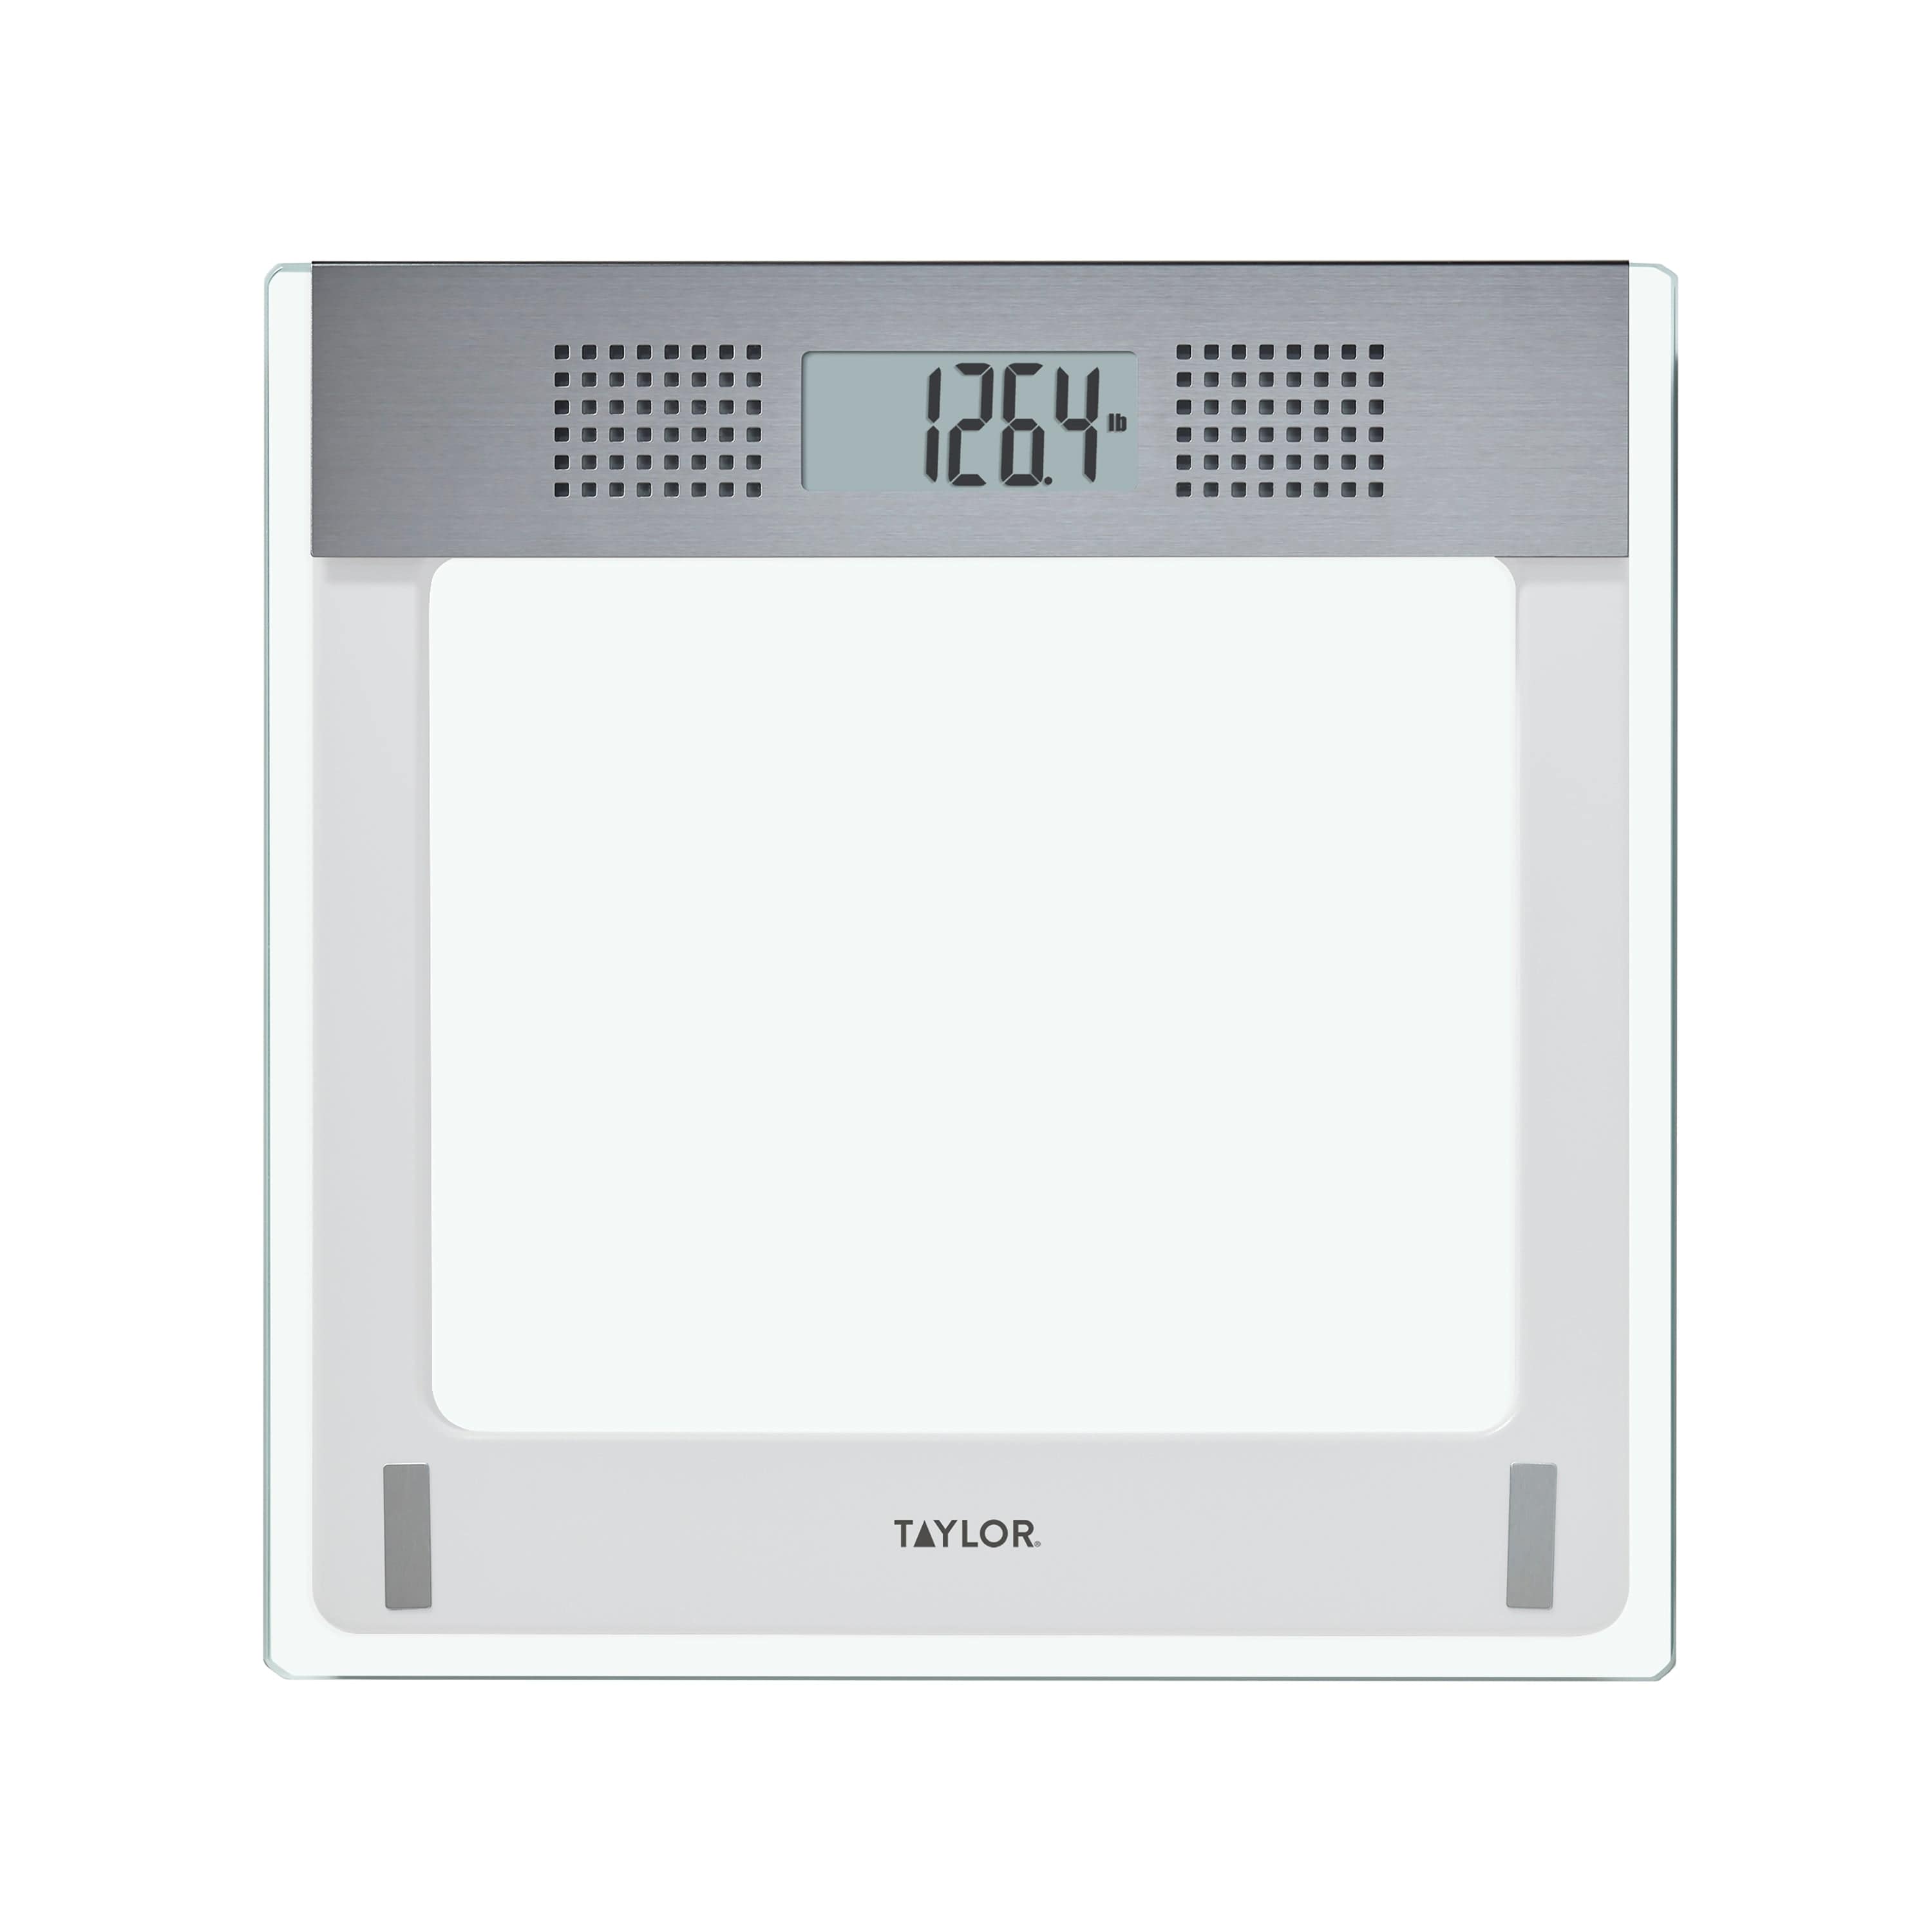 Taylor Digital Scale, Clear Glass, Bathroom Scales